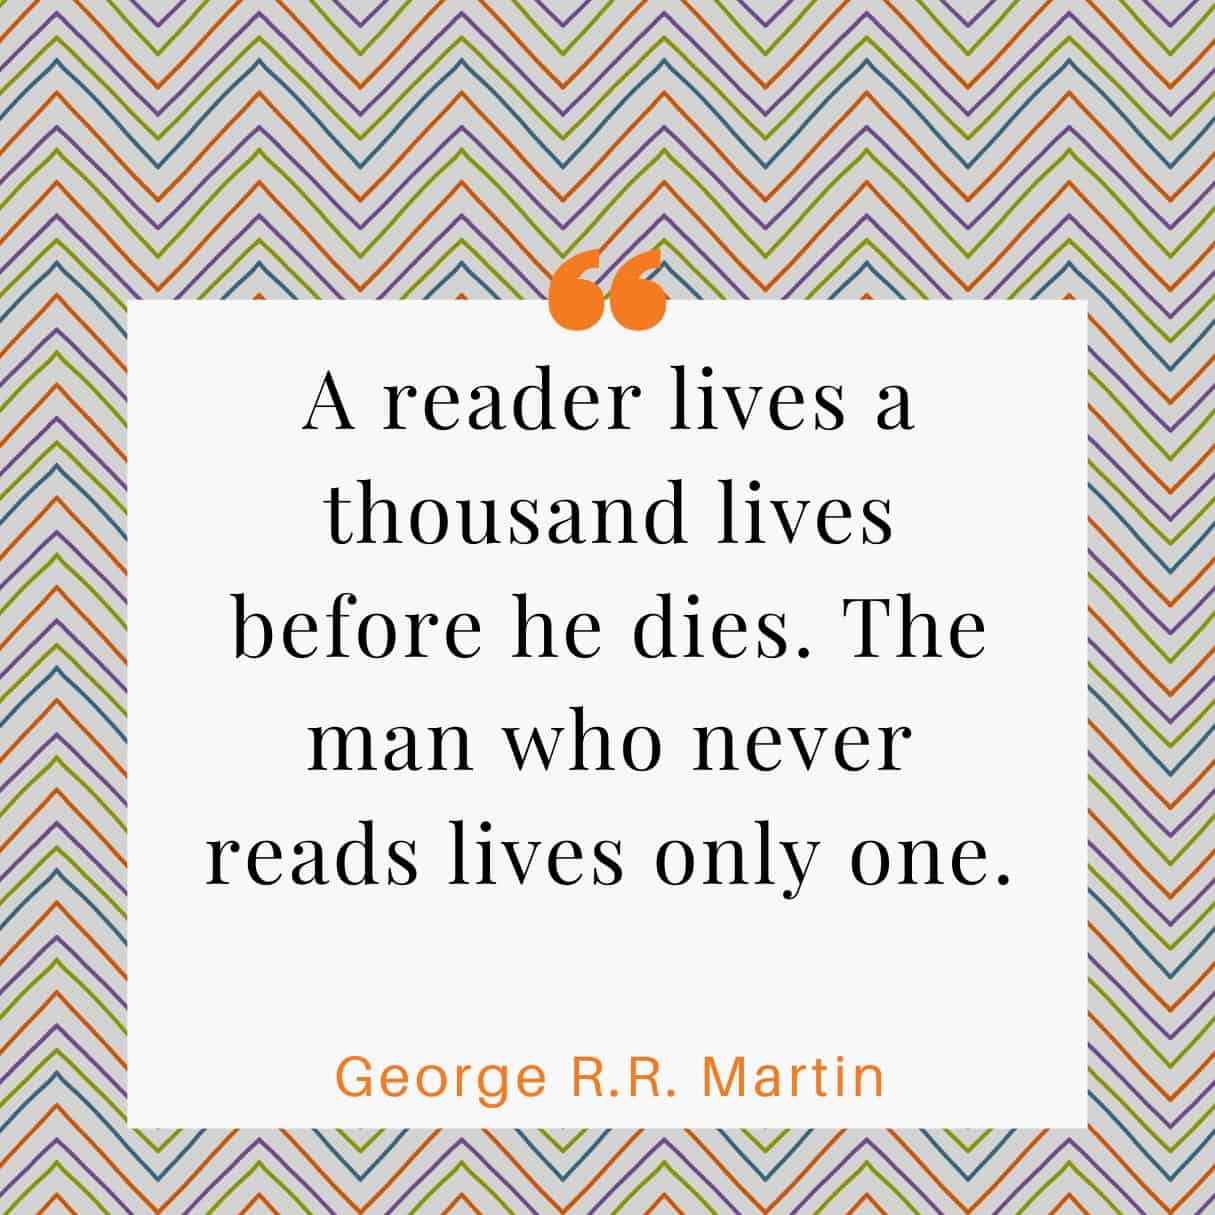 George R.R. Martin reading quote